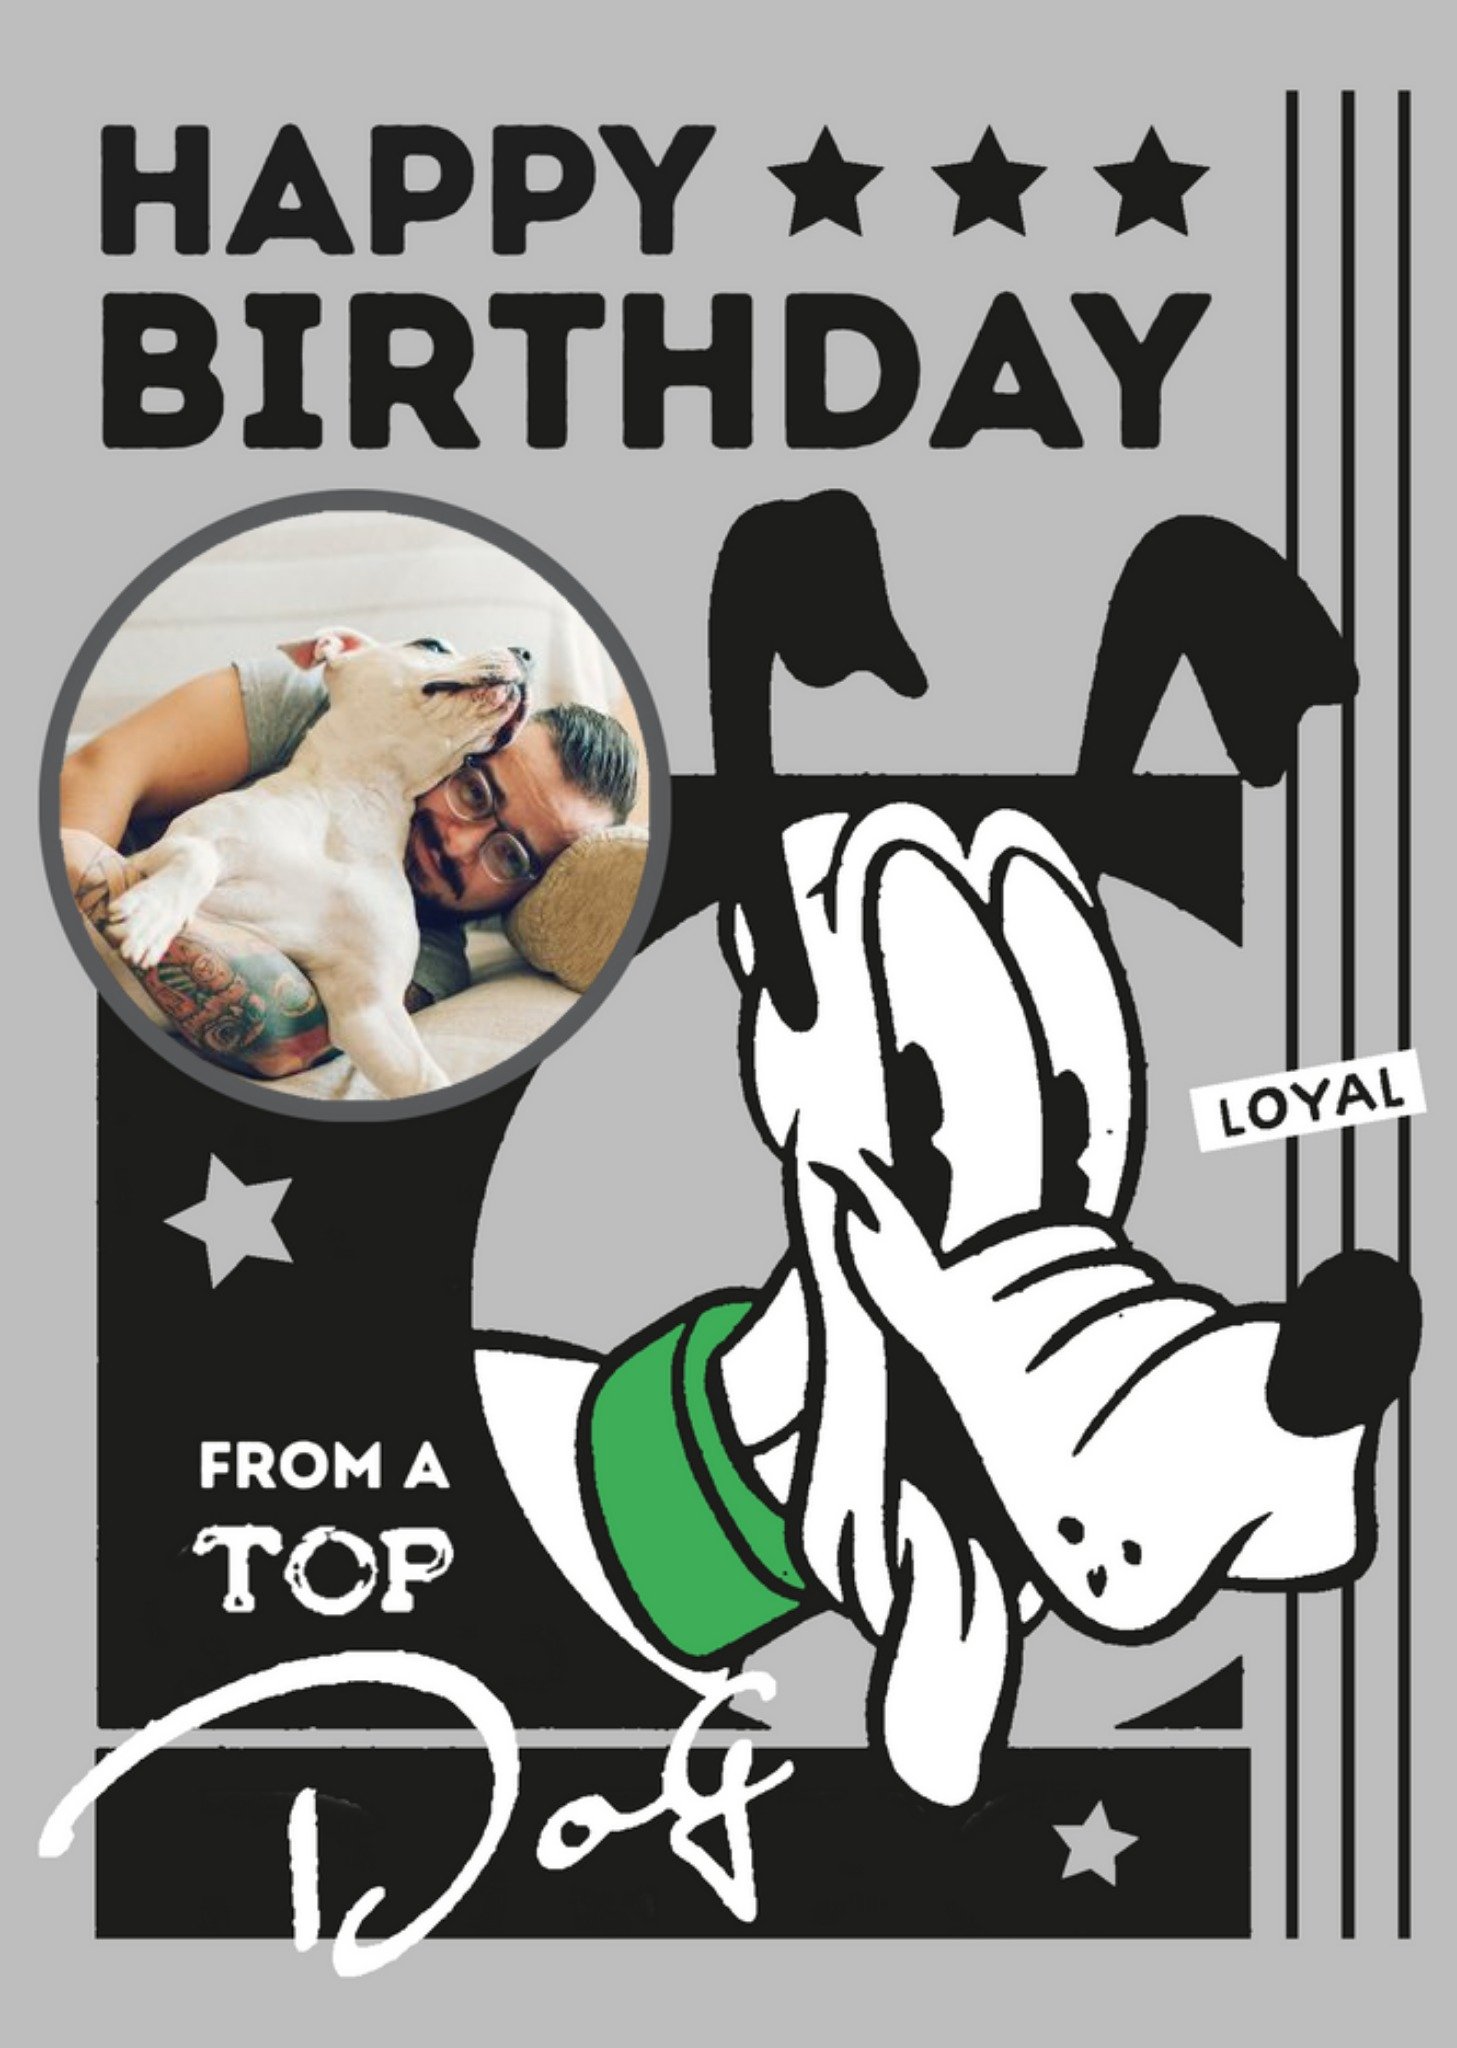 Disney 100 Pluto Photo Upload Birthday Card Ecard